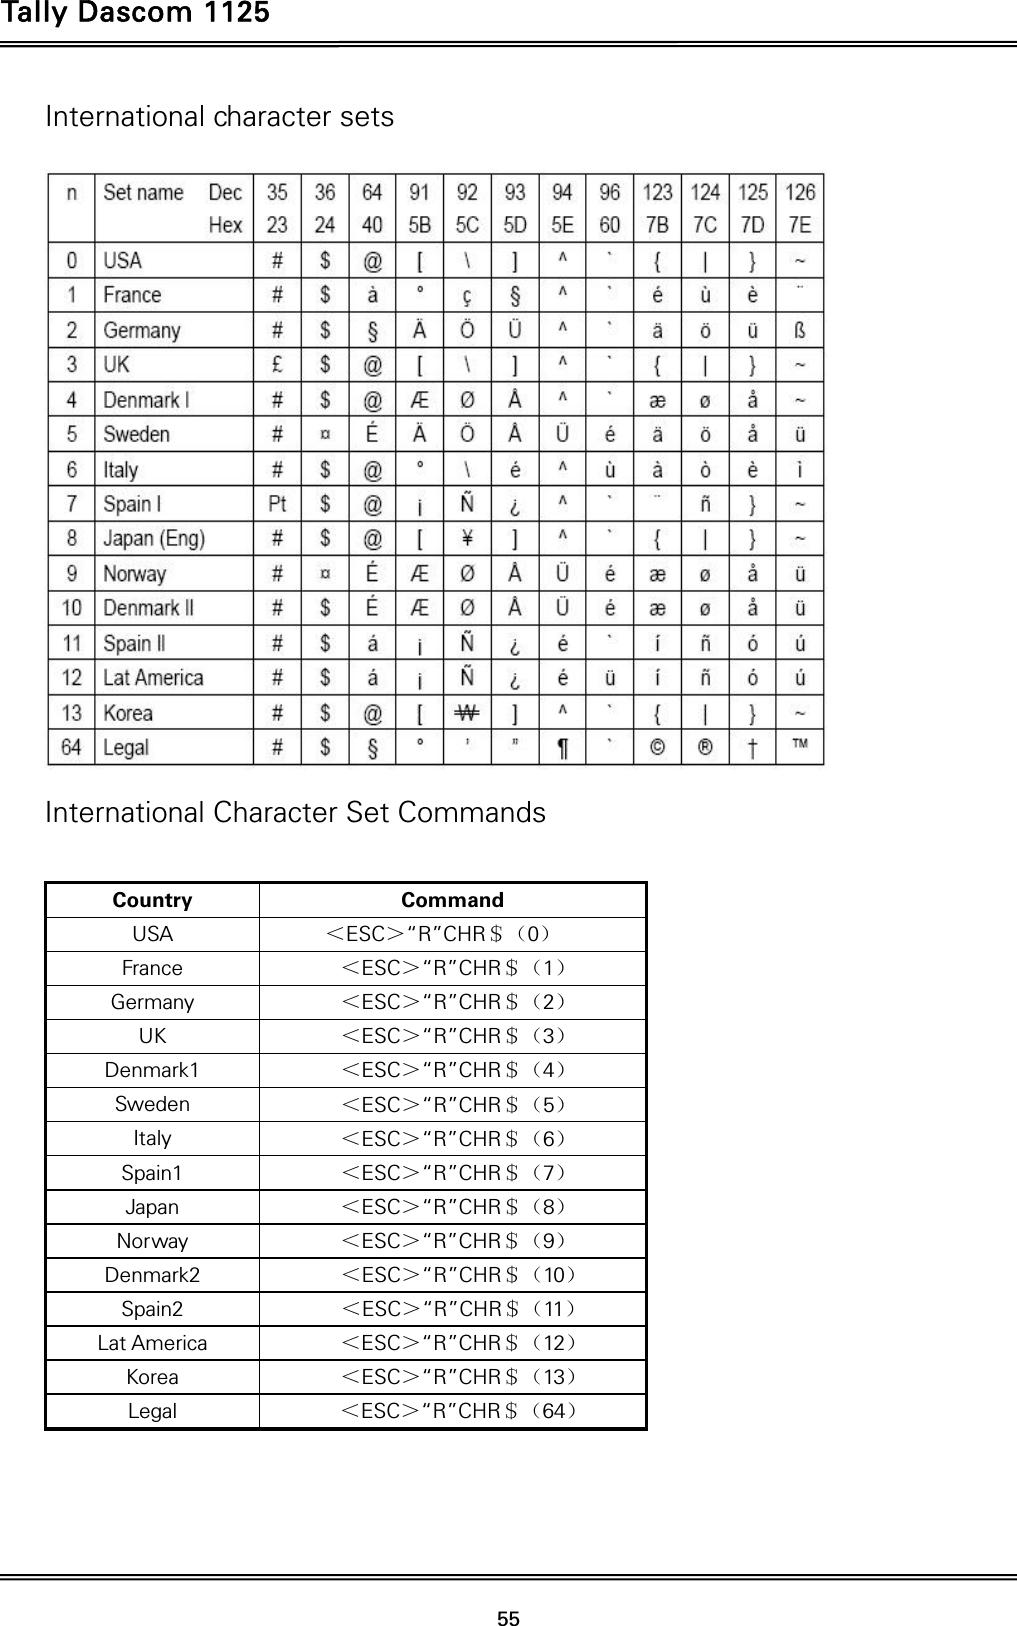 Tally Dascom 1125   55  International character sets     International Character Set Commands  Country Command USA  ＜ESC＞“R”CHR＄（0） France   ＜ESC＞“R”CHR＄（1） Germany   ＜ESC＞“R”CHR＄（2） UK   ＜ESC＞“R”CHR＄（3） Denmark1   ＜ESC＞“R”CHR＄（4） Sweden   ＜ESC＞“R”CHR＄（5） Italy   ＜ESC＞“R”CHR＄（6） Spain1   ＜ESC＞“R”CHR＄（7） Japan   ＜ESC＞“R”CHR＄（8） Norway   ＜ESC＞“R”CHR＄（9） Denmark2    ＜ESC＞“R”CHR＄（10） Spain2    ＜ESC＞“R”CHR＄（11） Lat America    ＜ESC＞“R”CHR＄（12） Korea    ＜ESC＞“R”CHR＄（13） Legal    ＜ESC＞“R”CHR＄（64）    